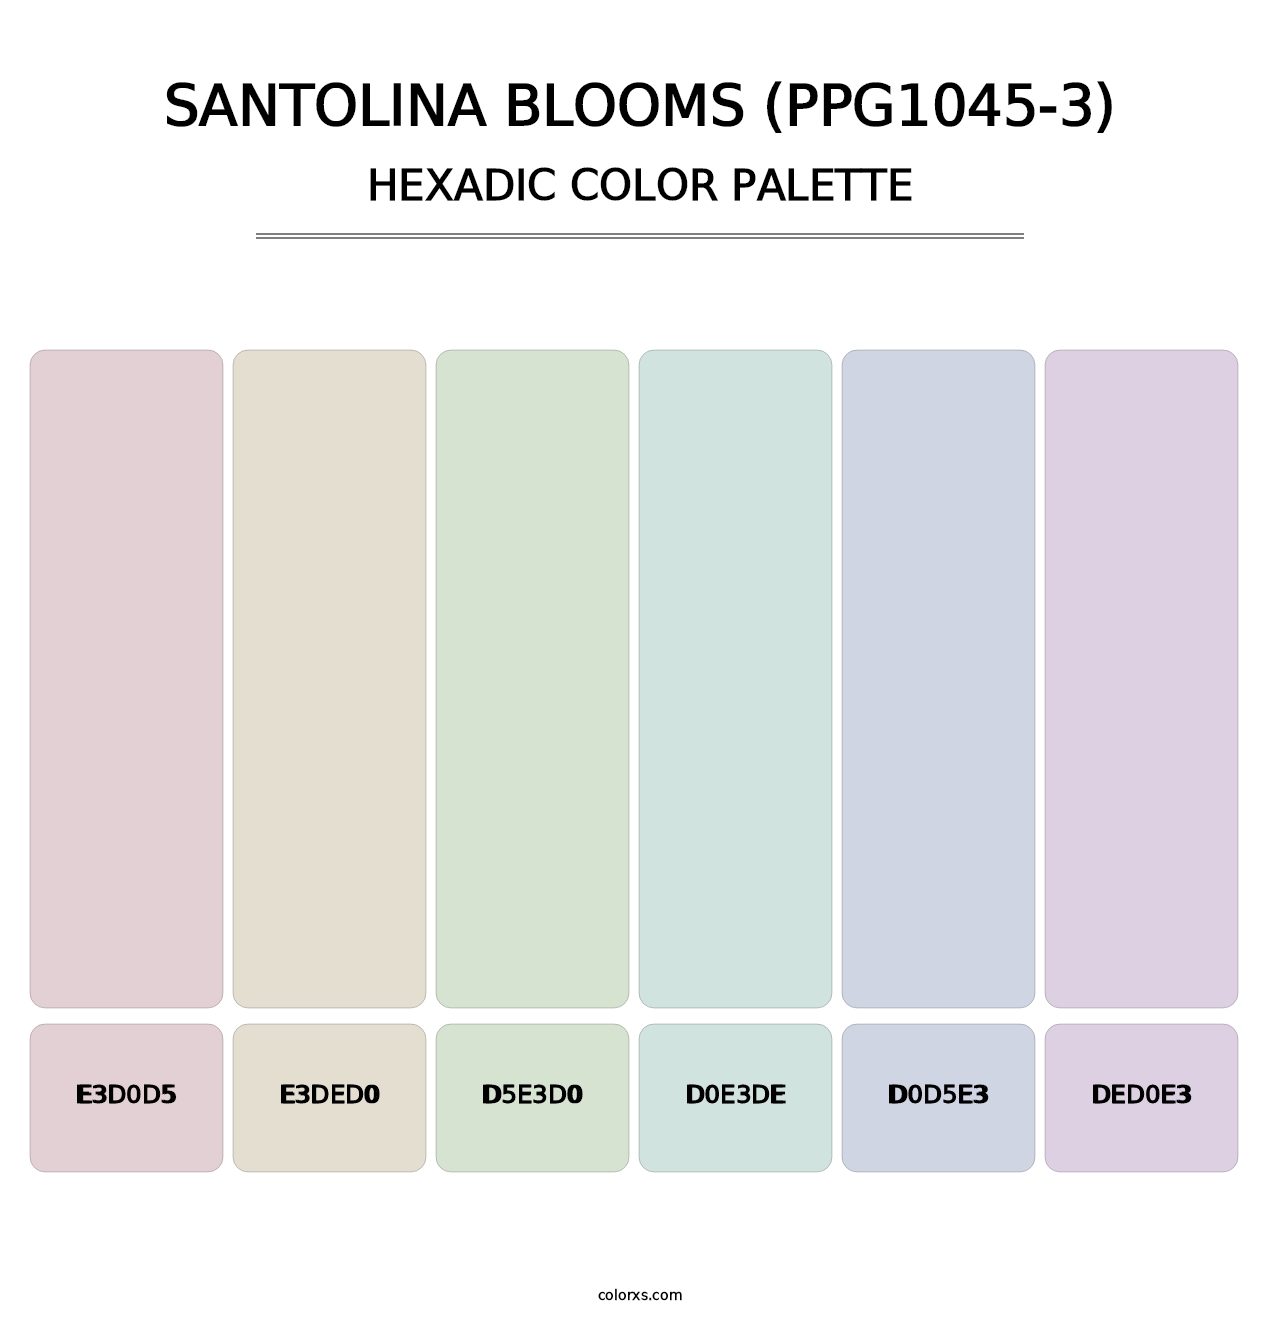 Santolina Blooms (PPG1045-3) - Hexadic Color Palette